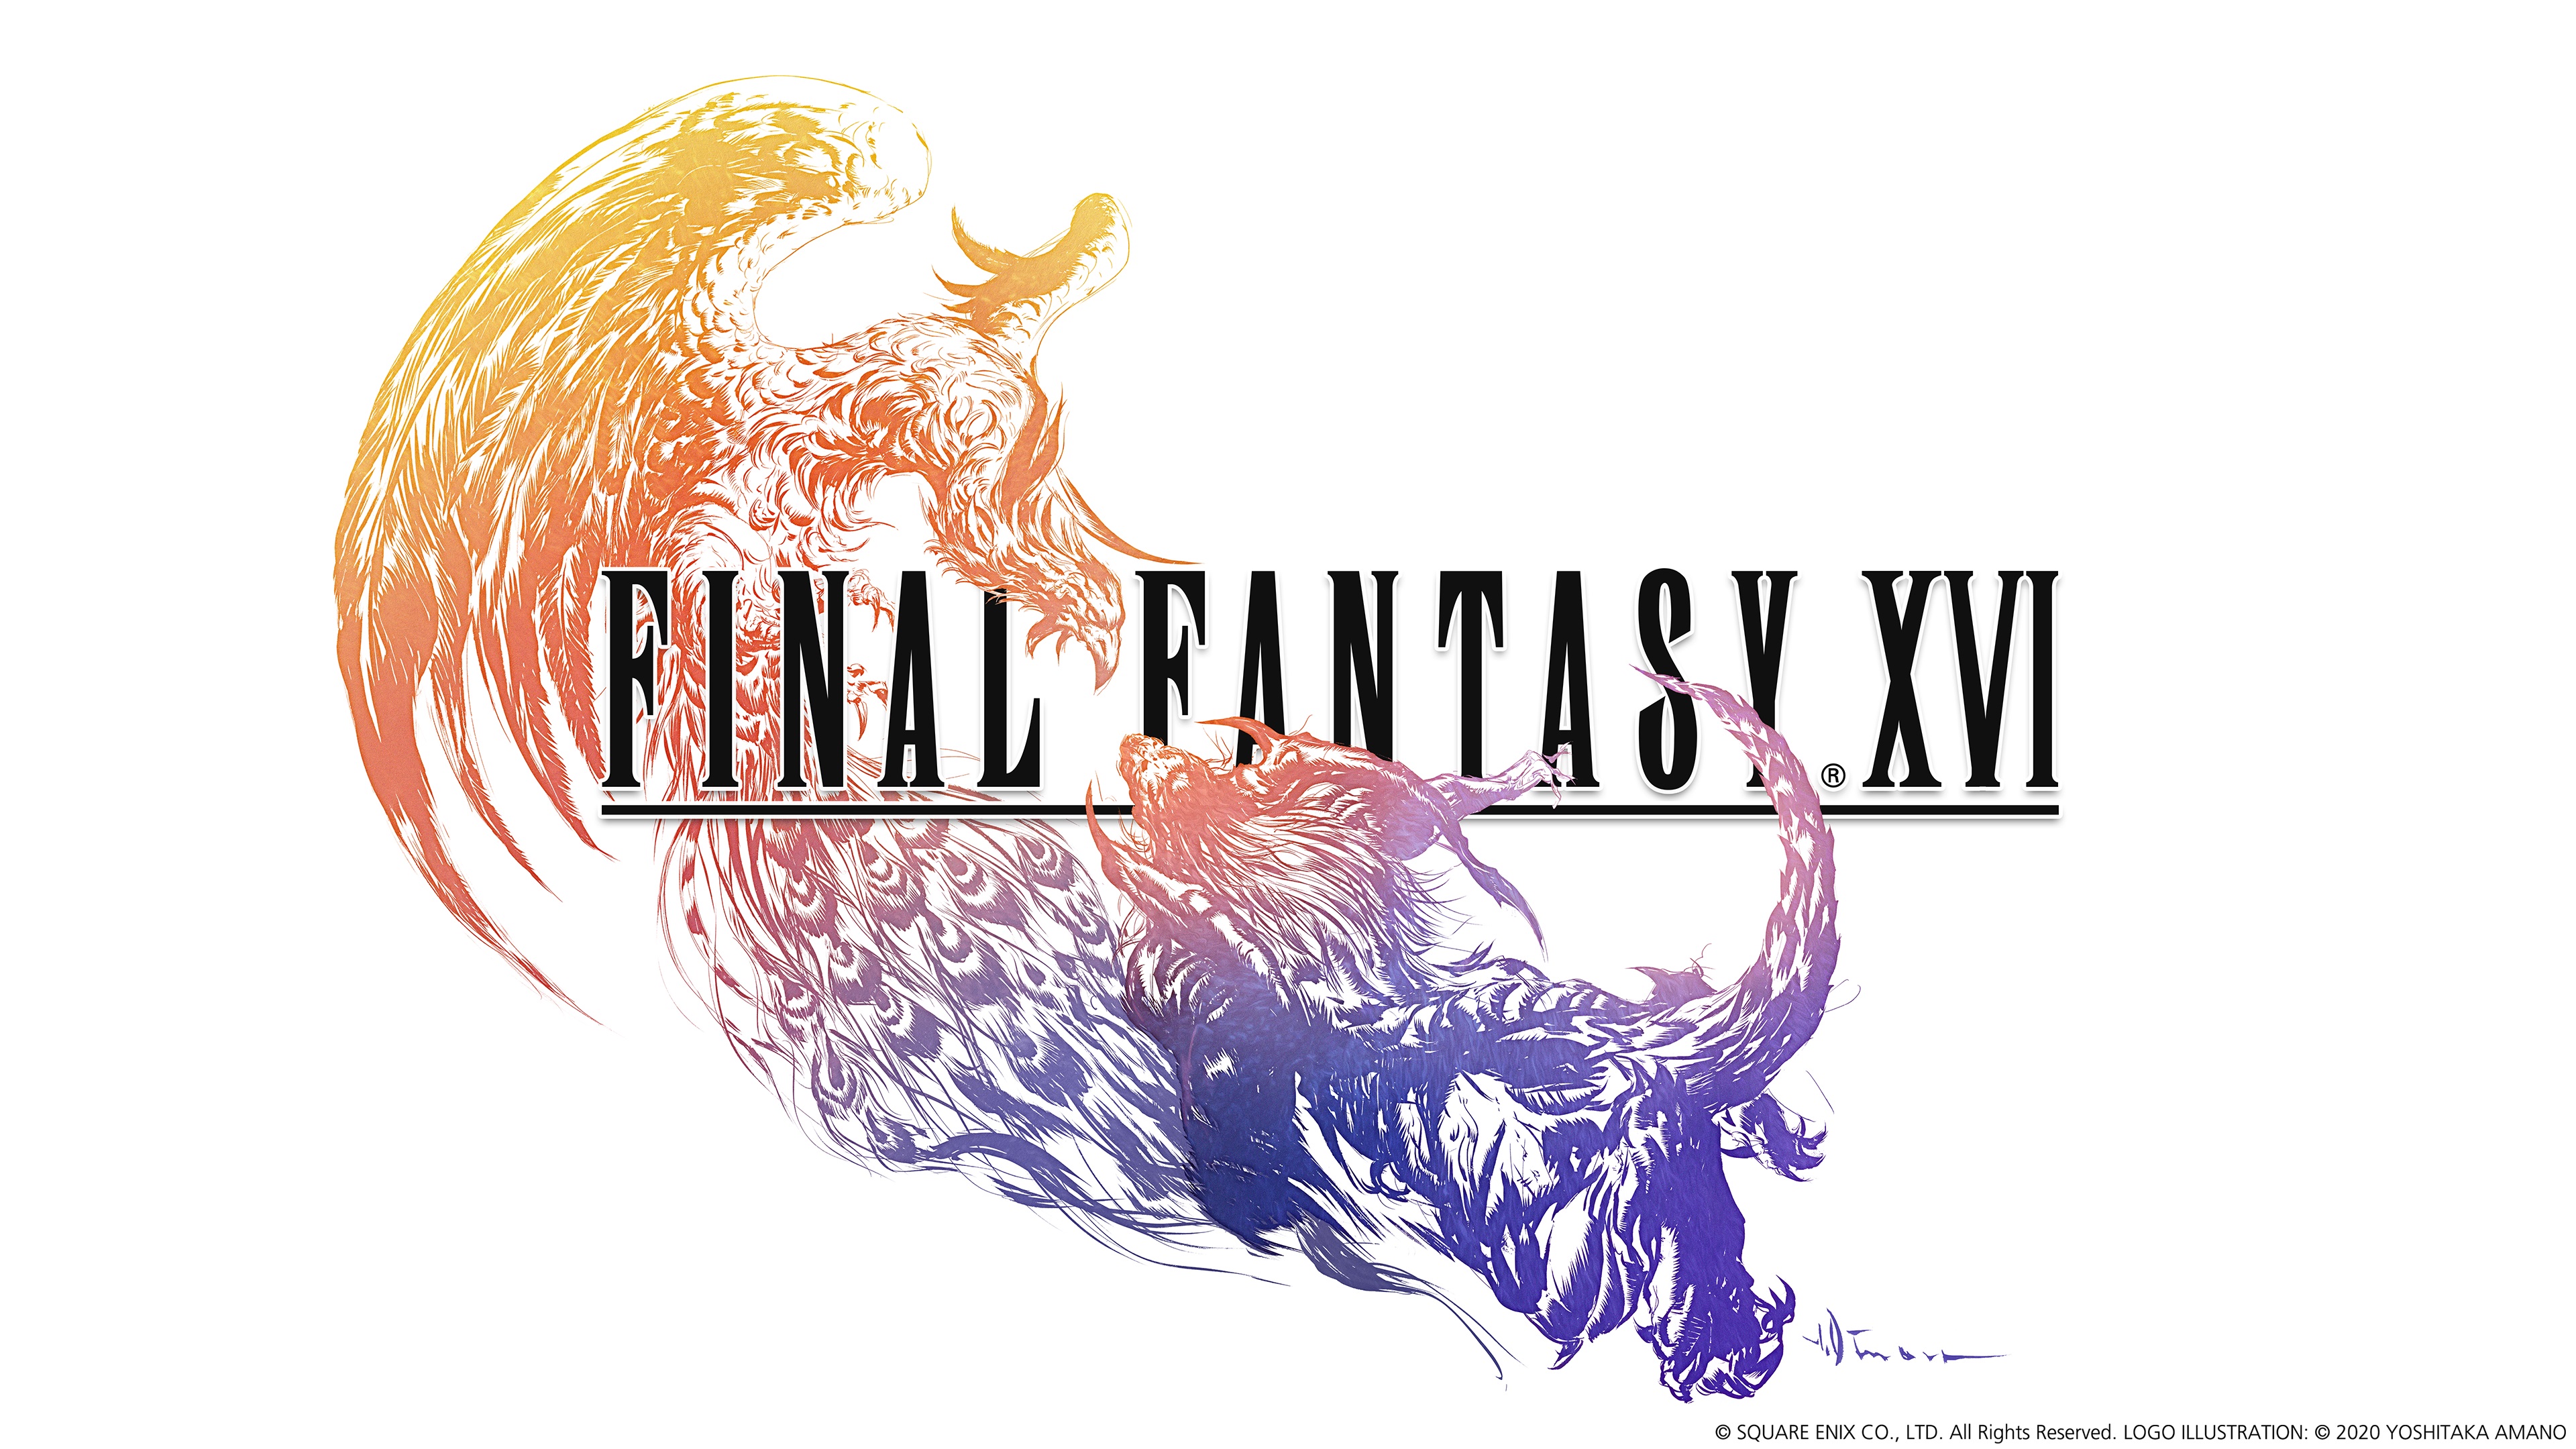 Video Game Final Fantasy XVI HD Wallpaper | Background Image